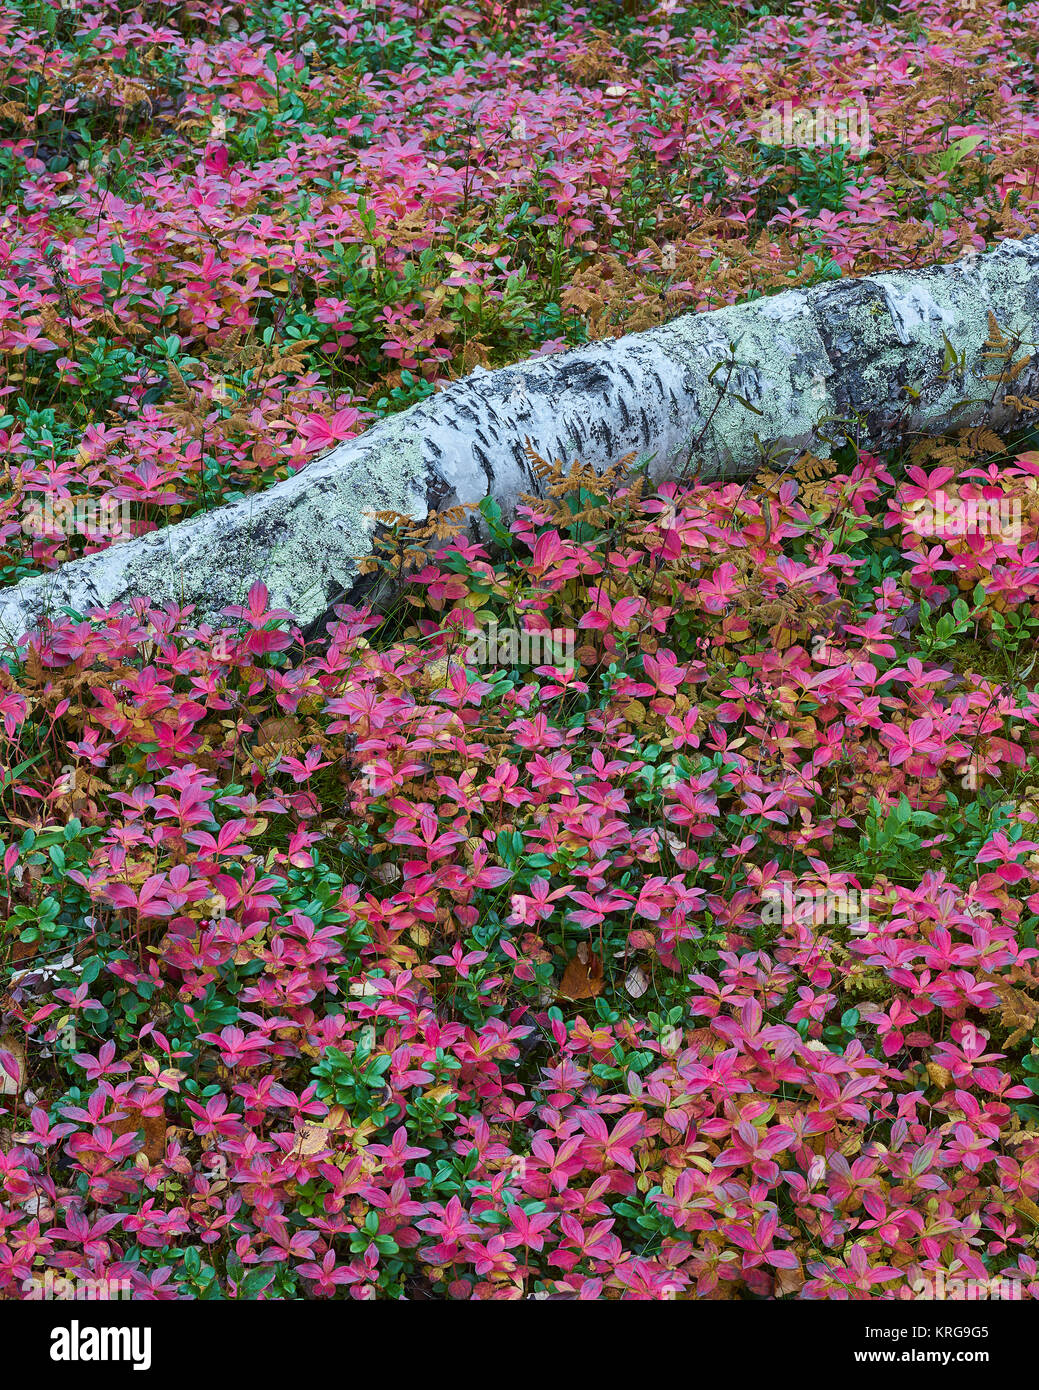 Fallen Silver Birch Tree Trunk et Cornel nain à même le sol forestier, Finnmark, Norvège Banque D'Images